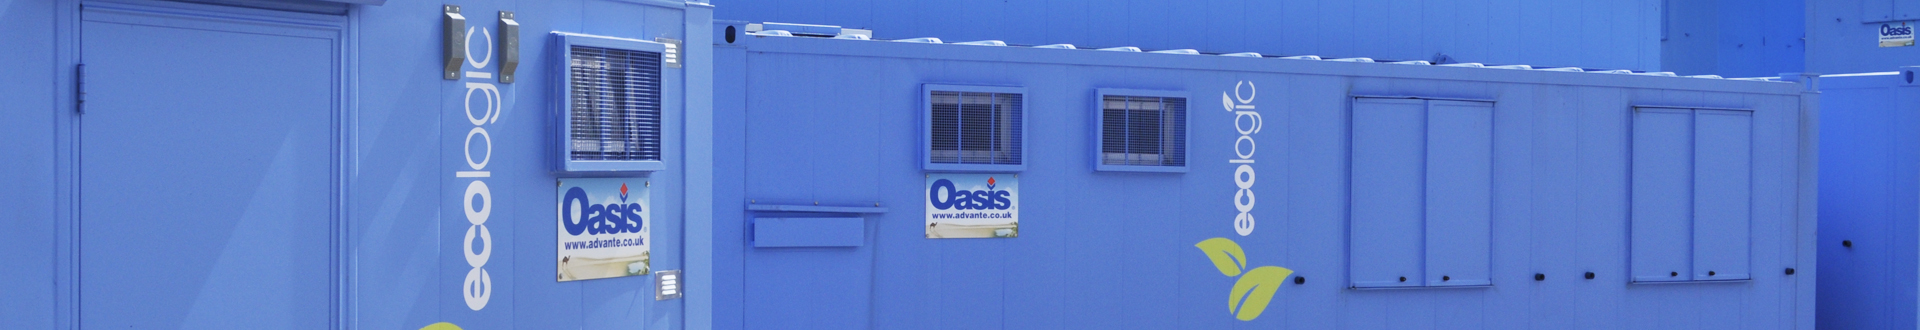 Oasis Welfare Unit - Site Welfare Cabin Self-contained Welfare Units